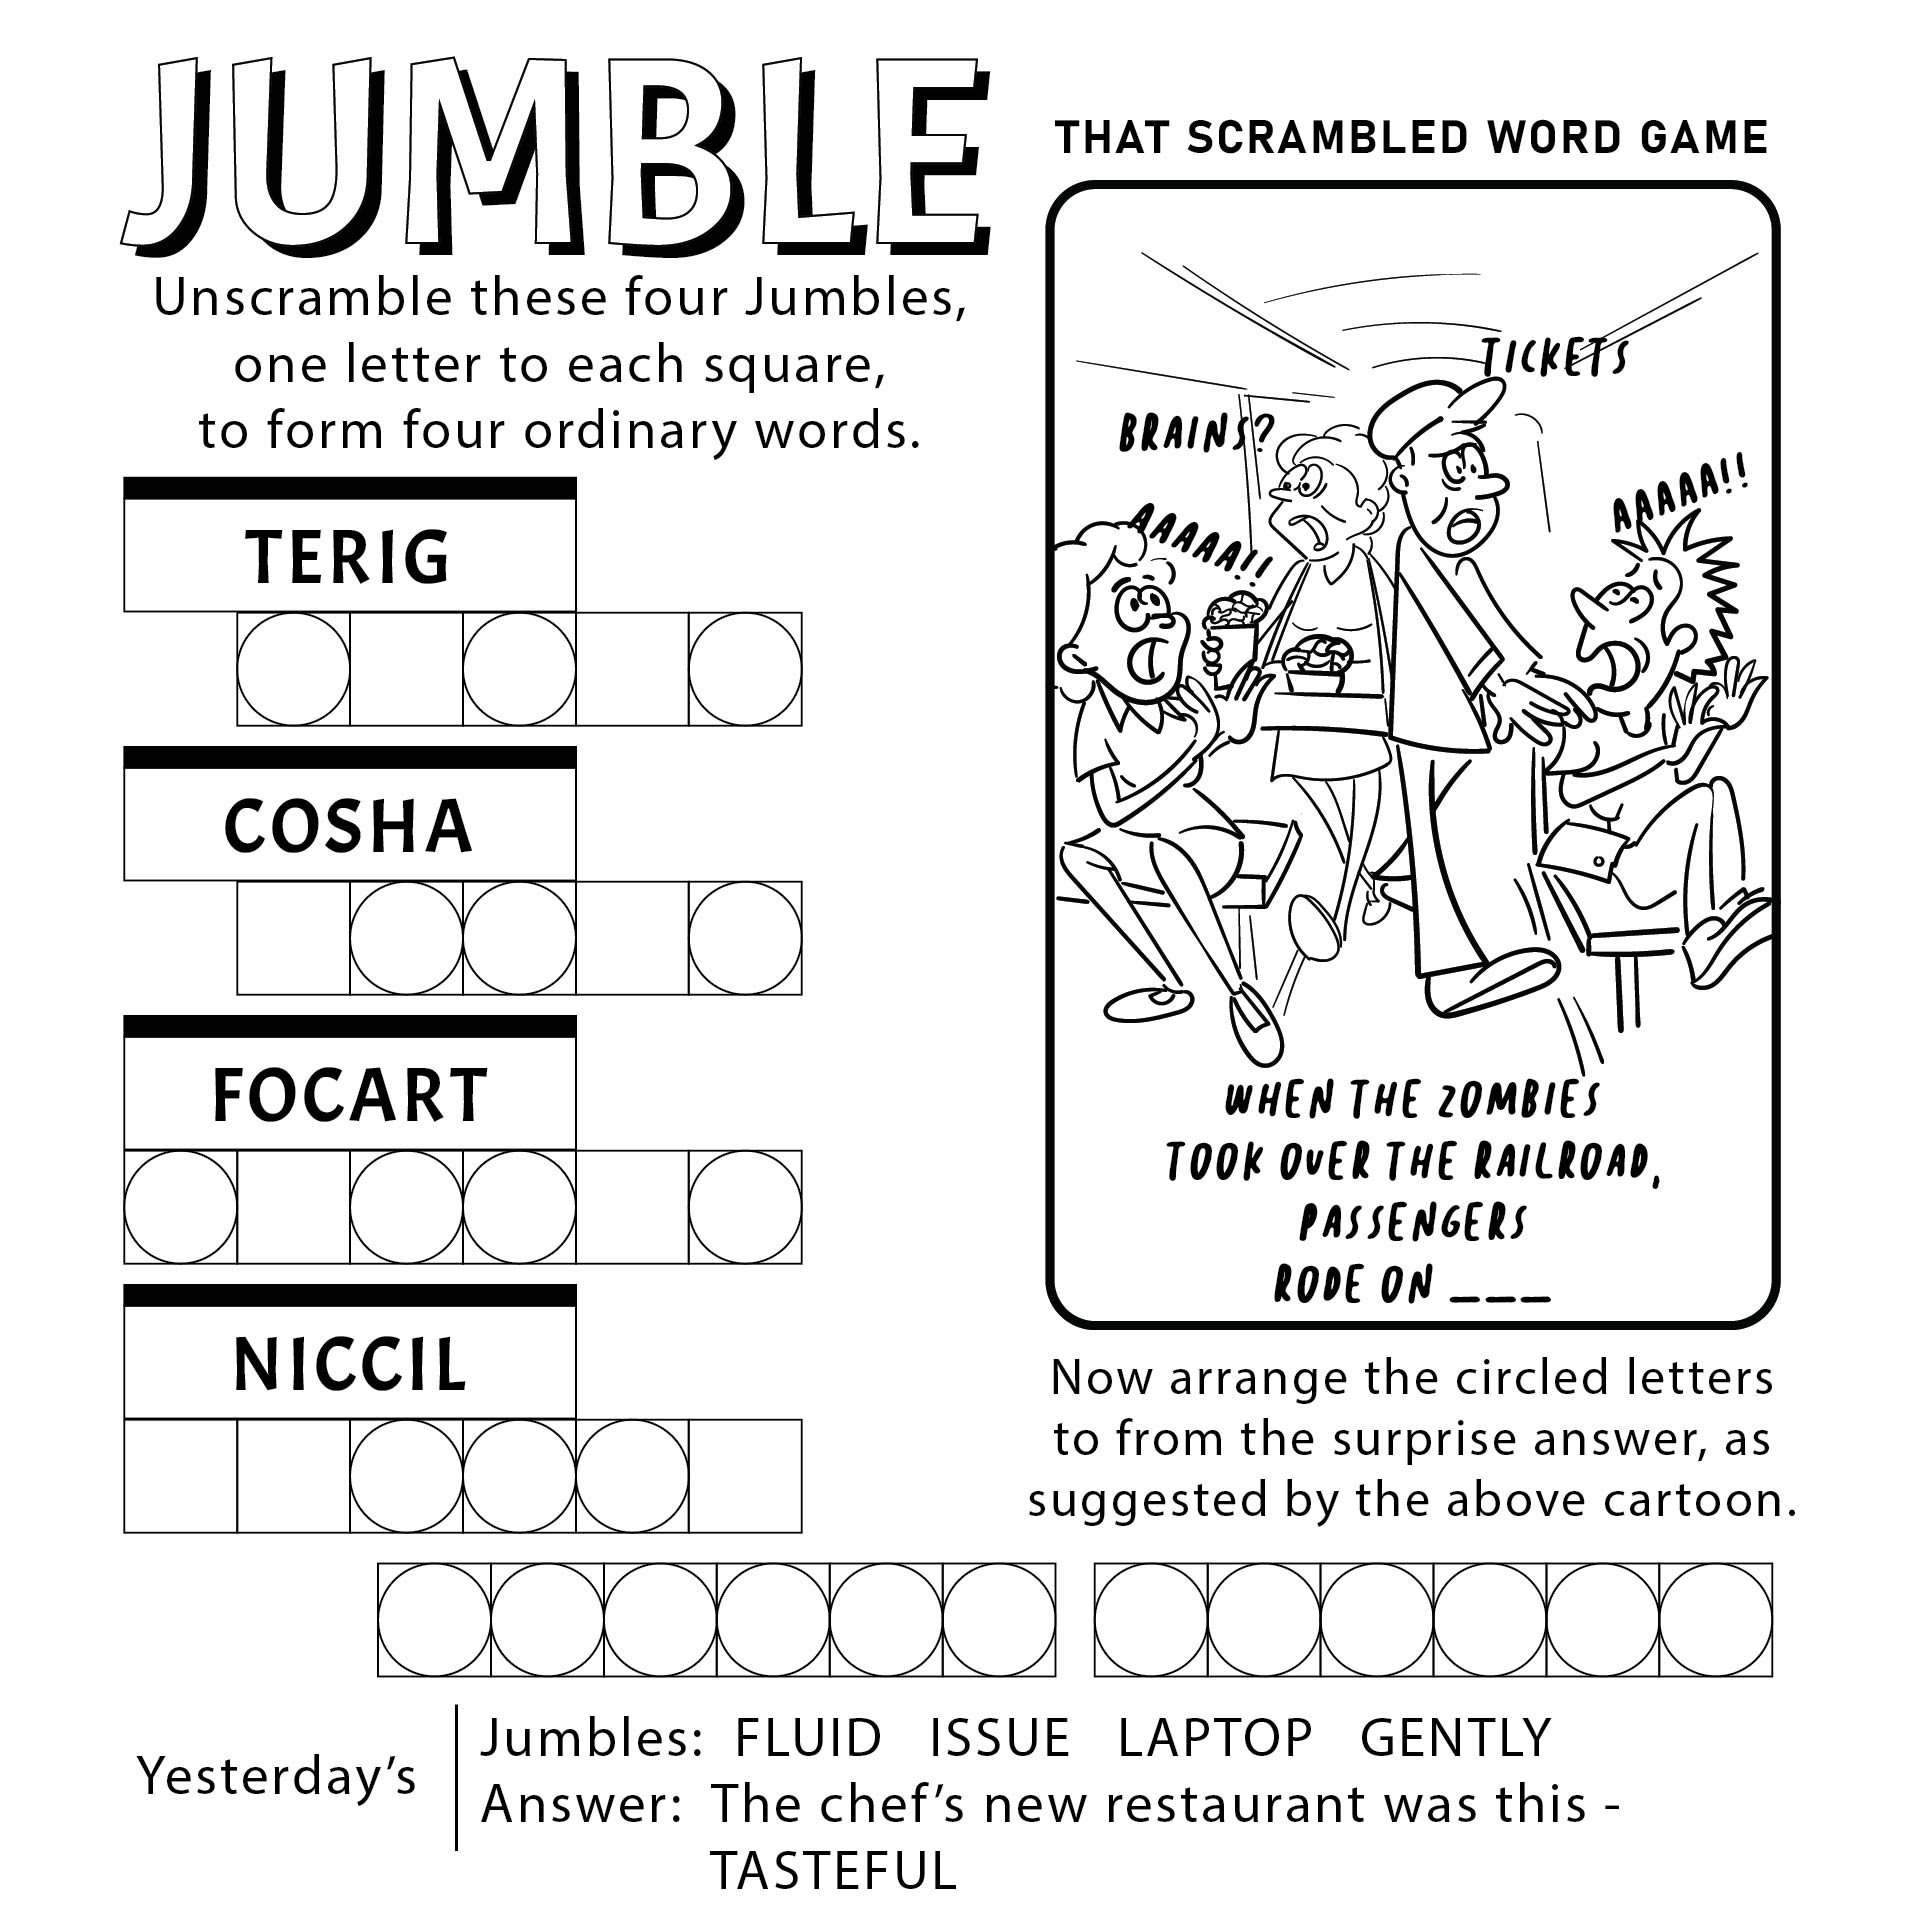 microsoft ultimate word games jumble answers